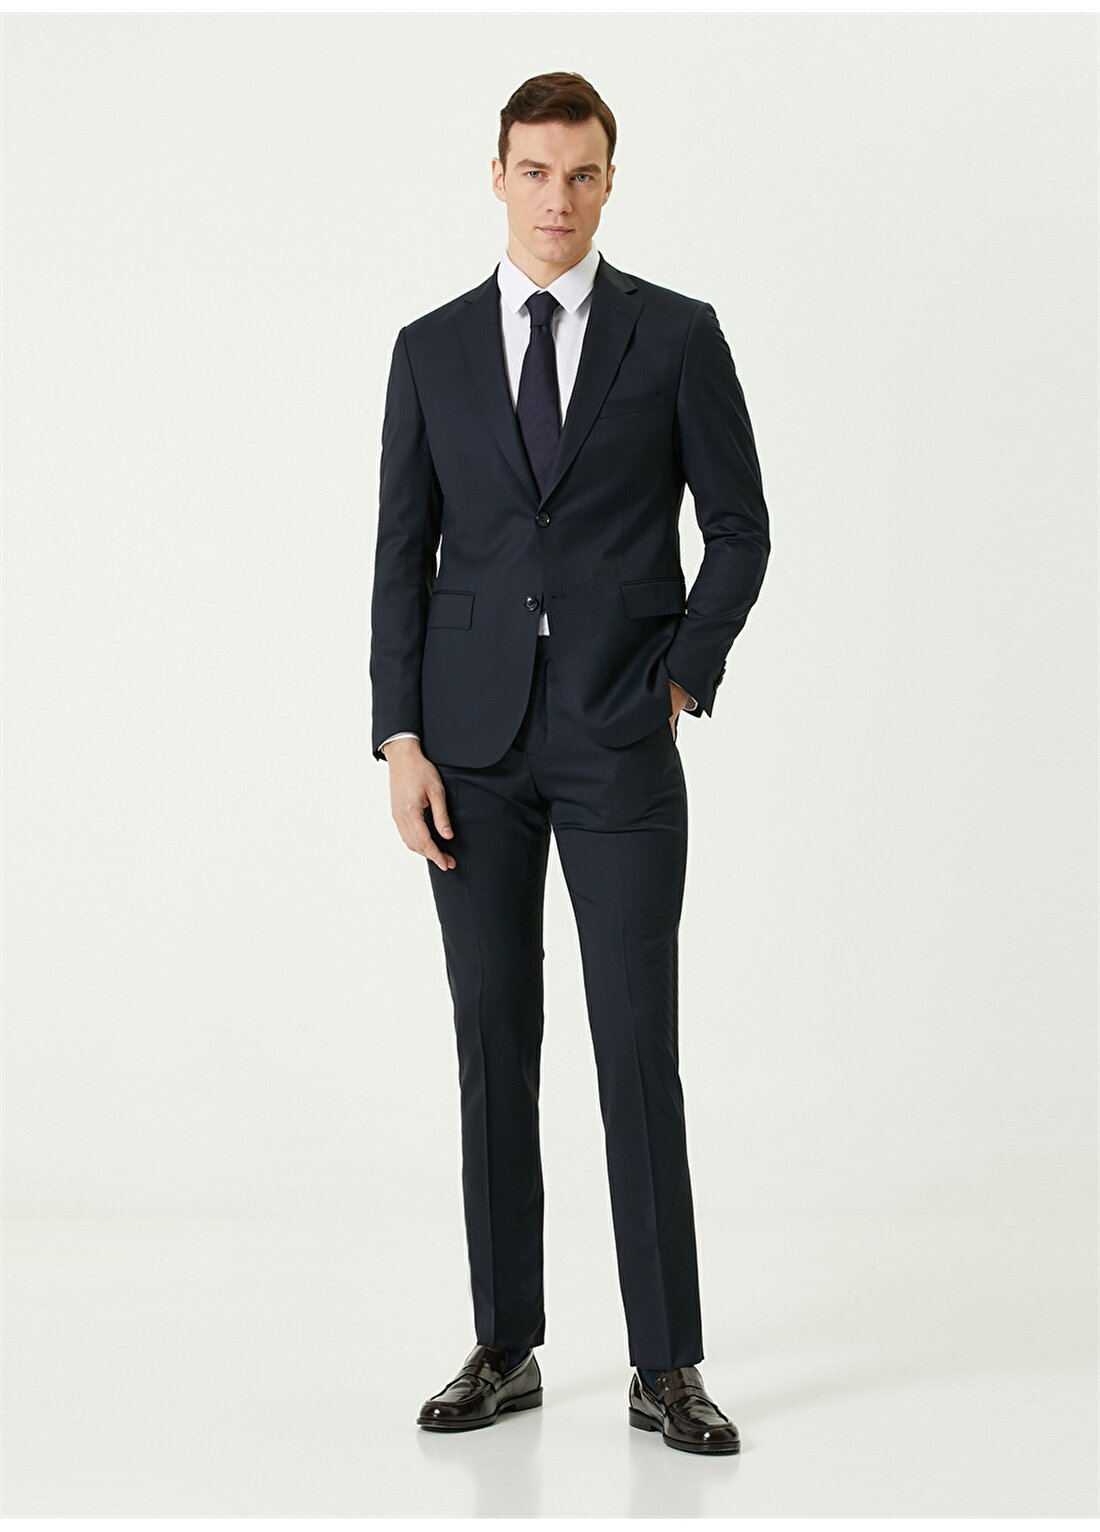 Network Ceket Yaka Normal Bel Slim Fit Diyagonal Lacivert Erkek Takım Elbise - 1083093